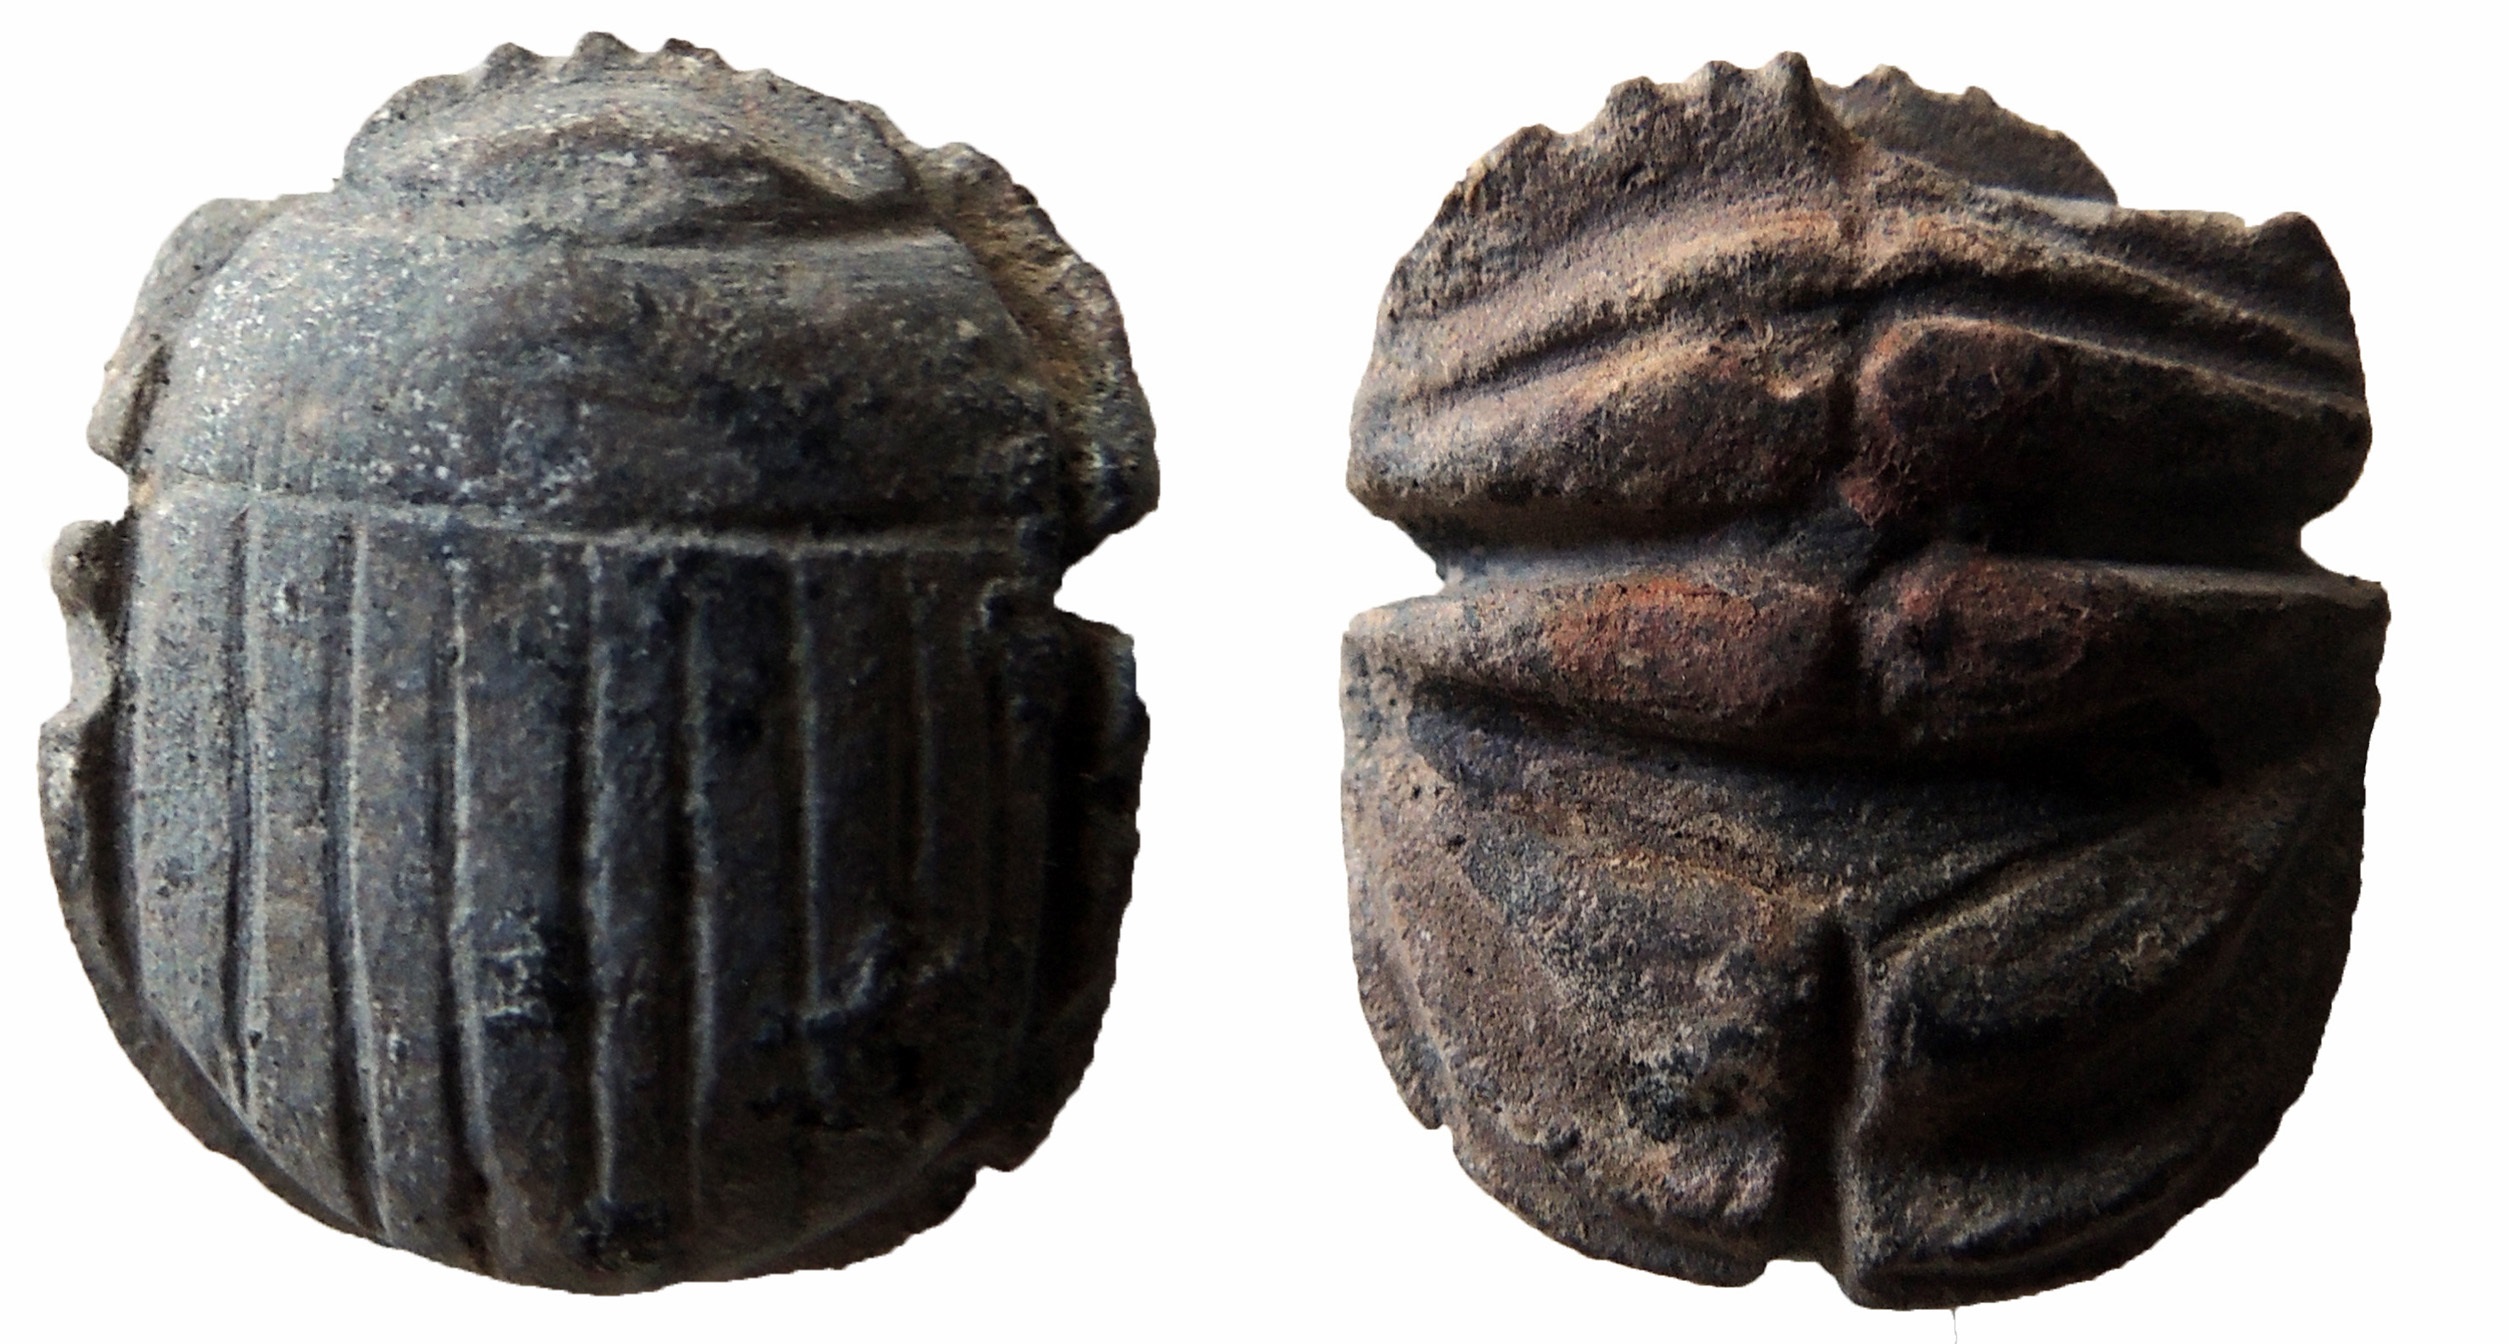 Scarabeo (amuleto) (SECOLI/ VII a.C)